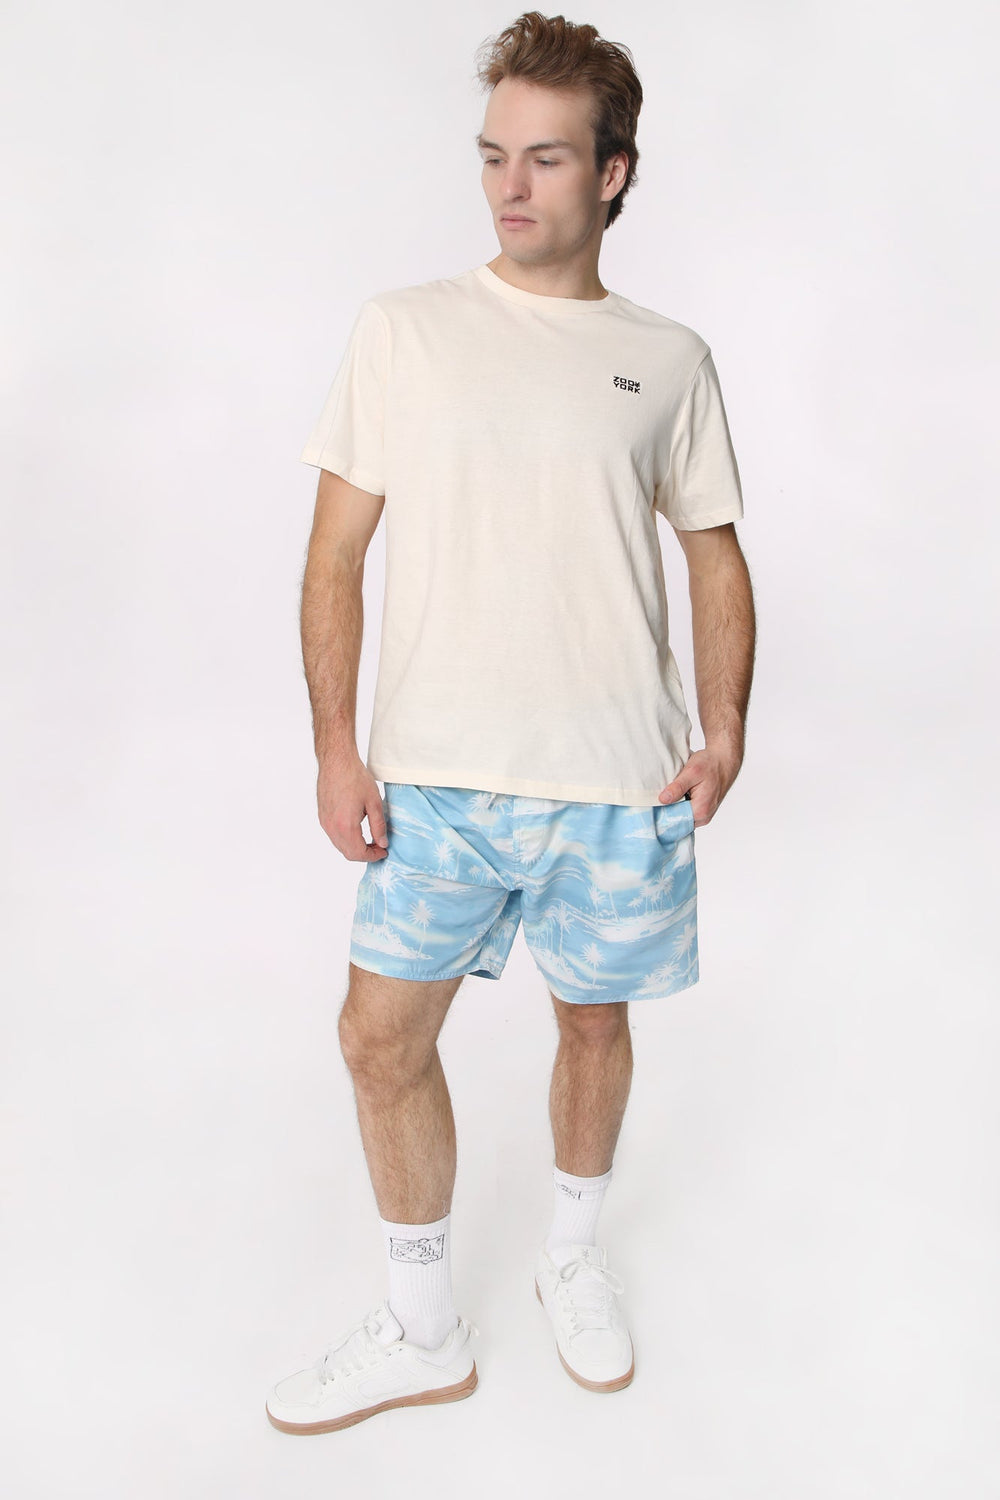 West49 Mens Printed Beach Shorts West49 Mens Printed Beach Shorts